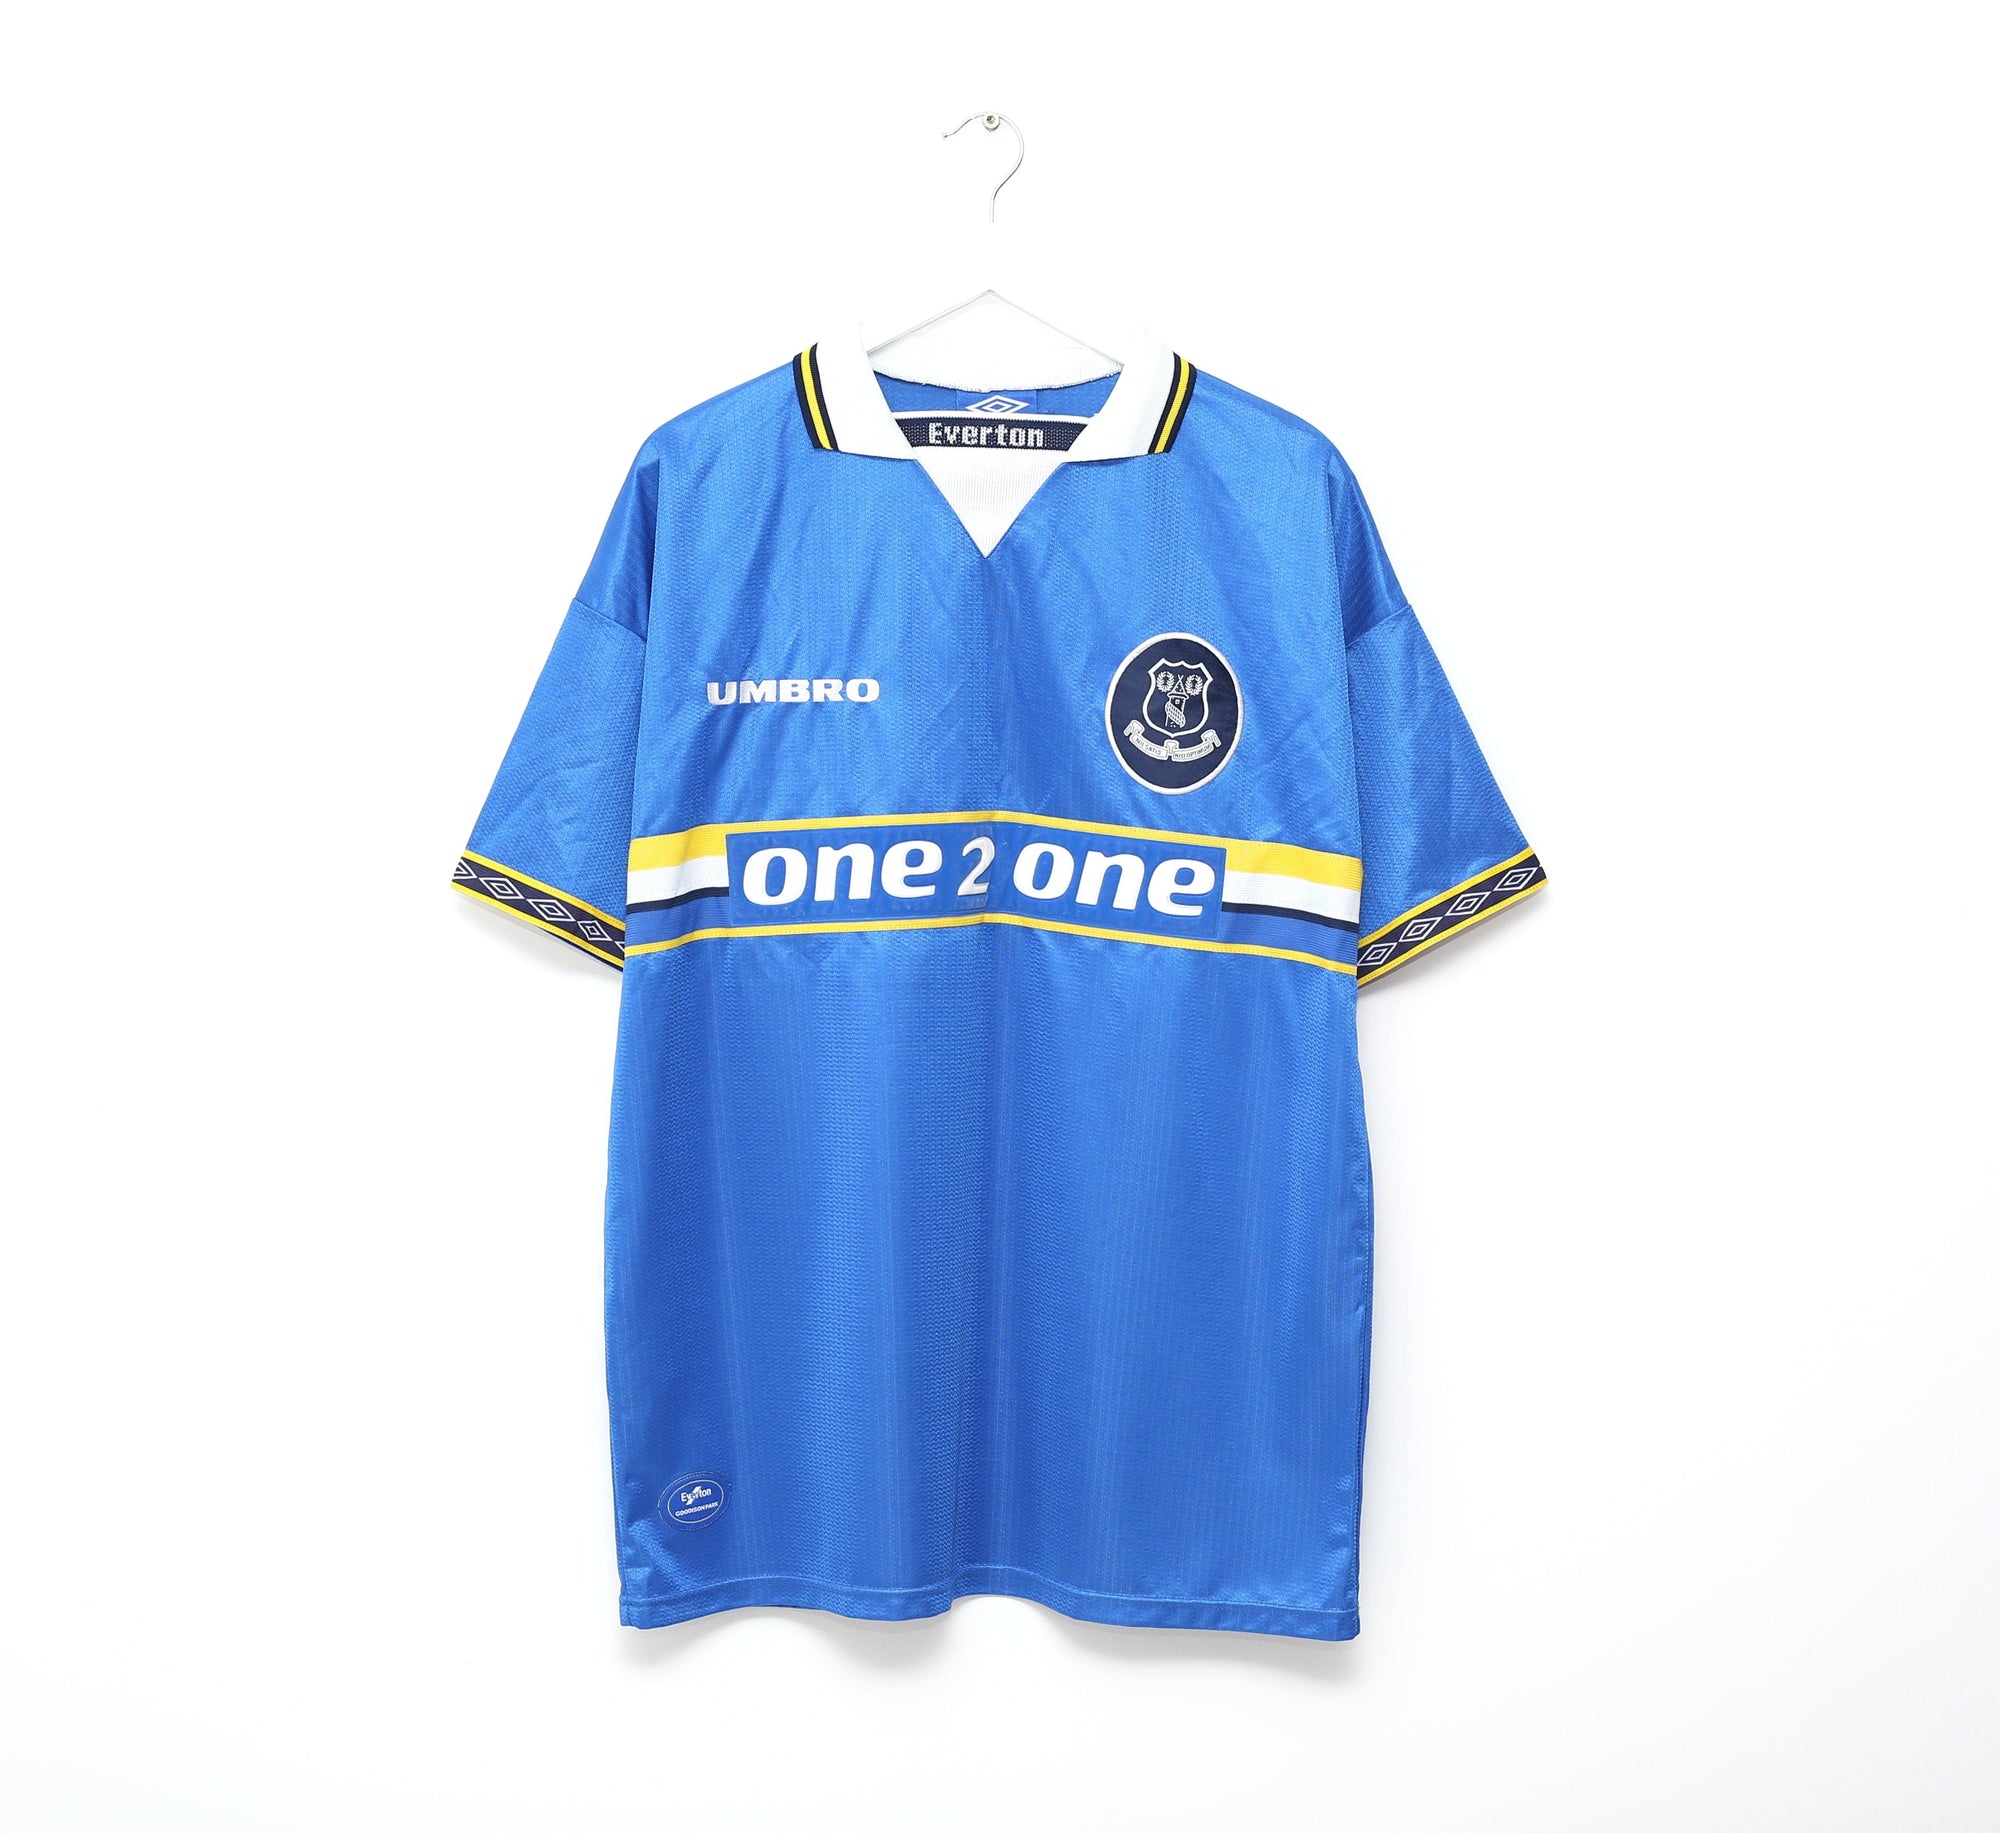 1997/99 MATERAZZI #15 Everton Vintage Umbro Home Football Shirt (XL) Italy Inter